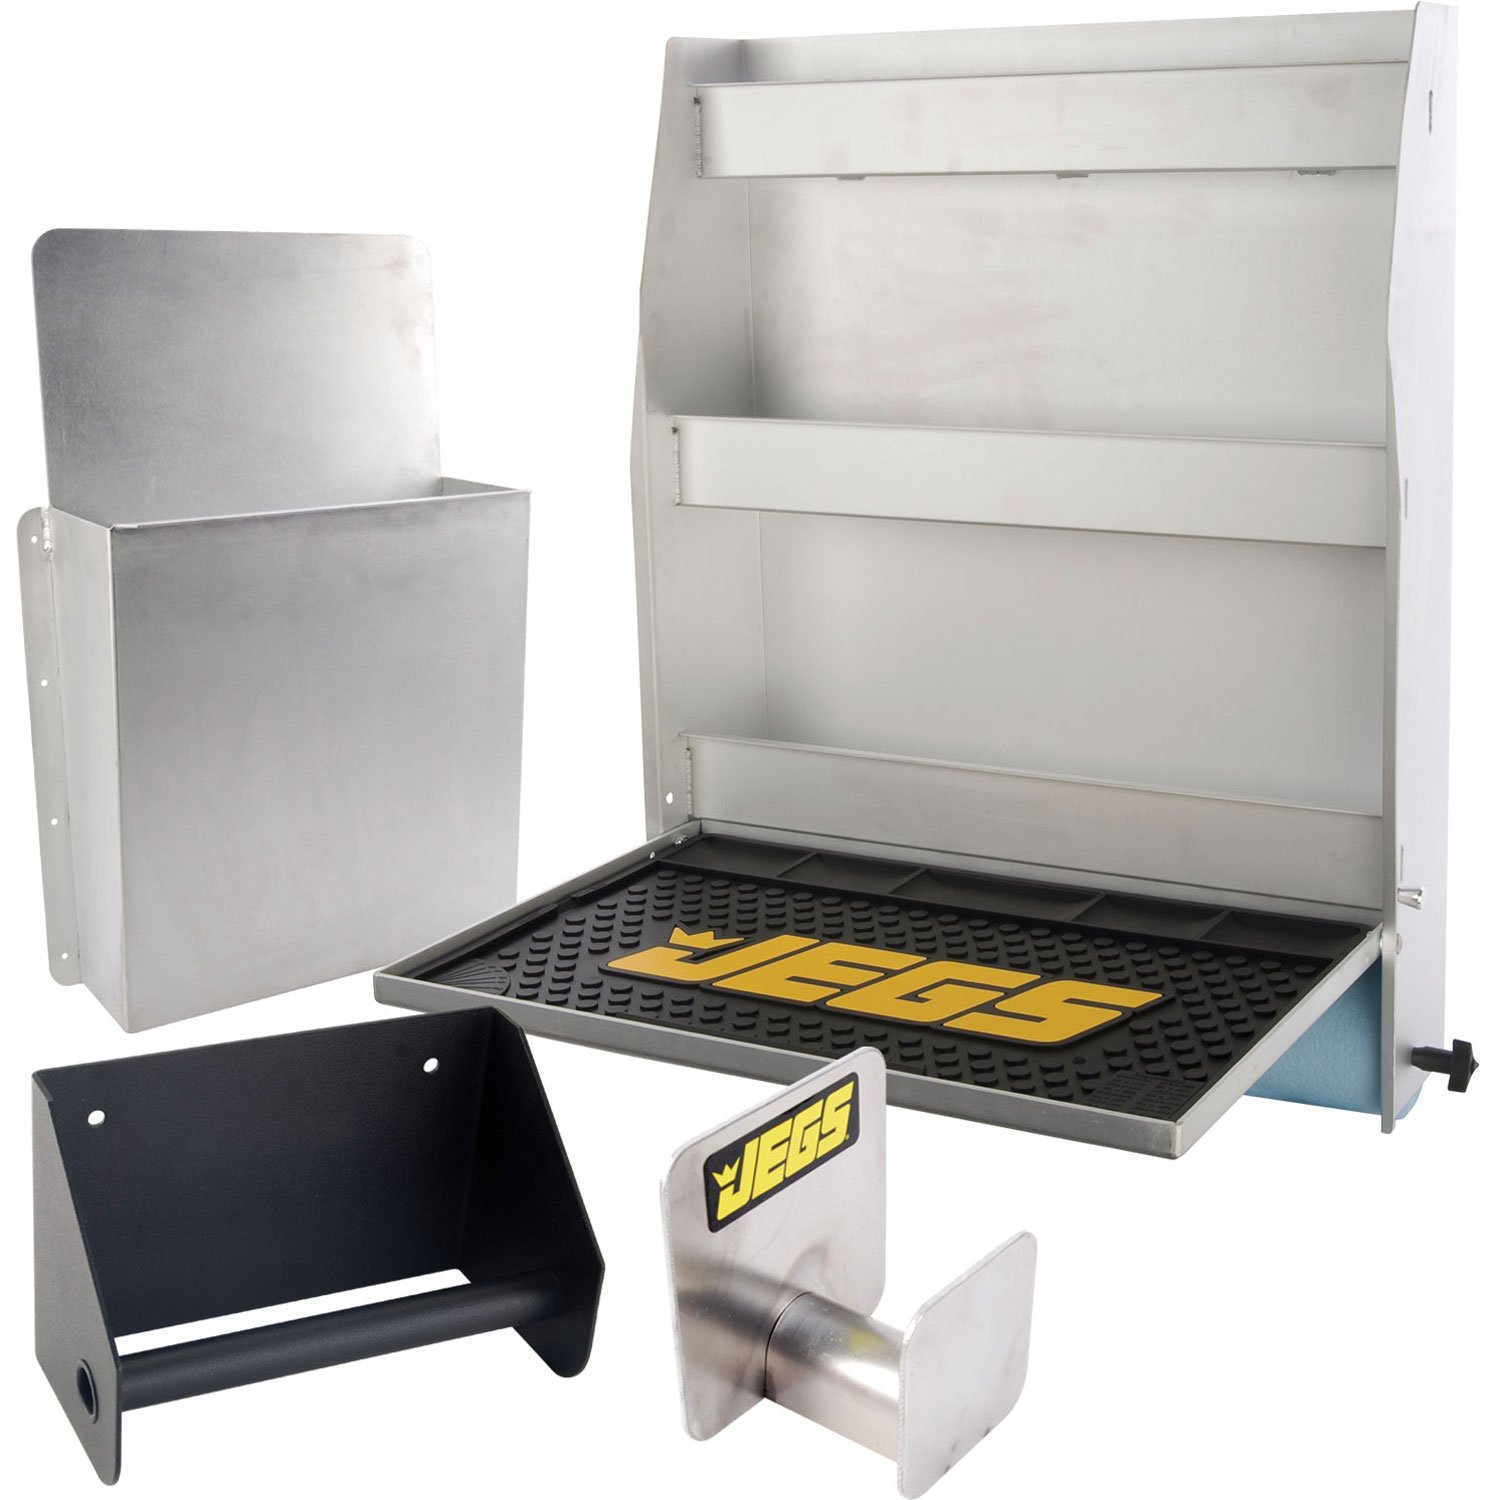 Trailer Storage Kit Includes: (1) Storage Cabinet (555-80330)